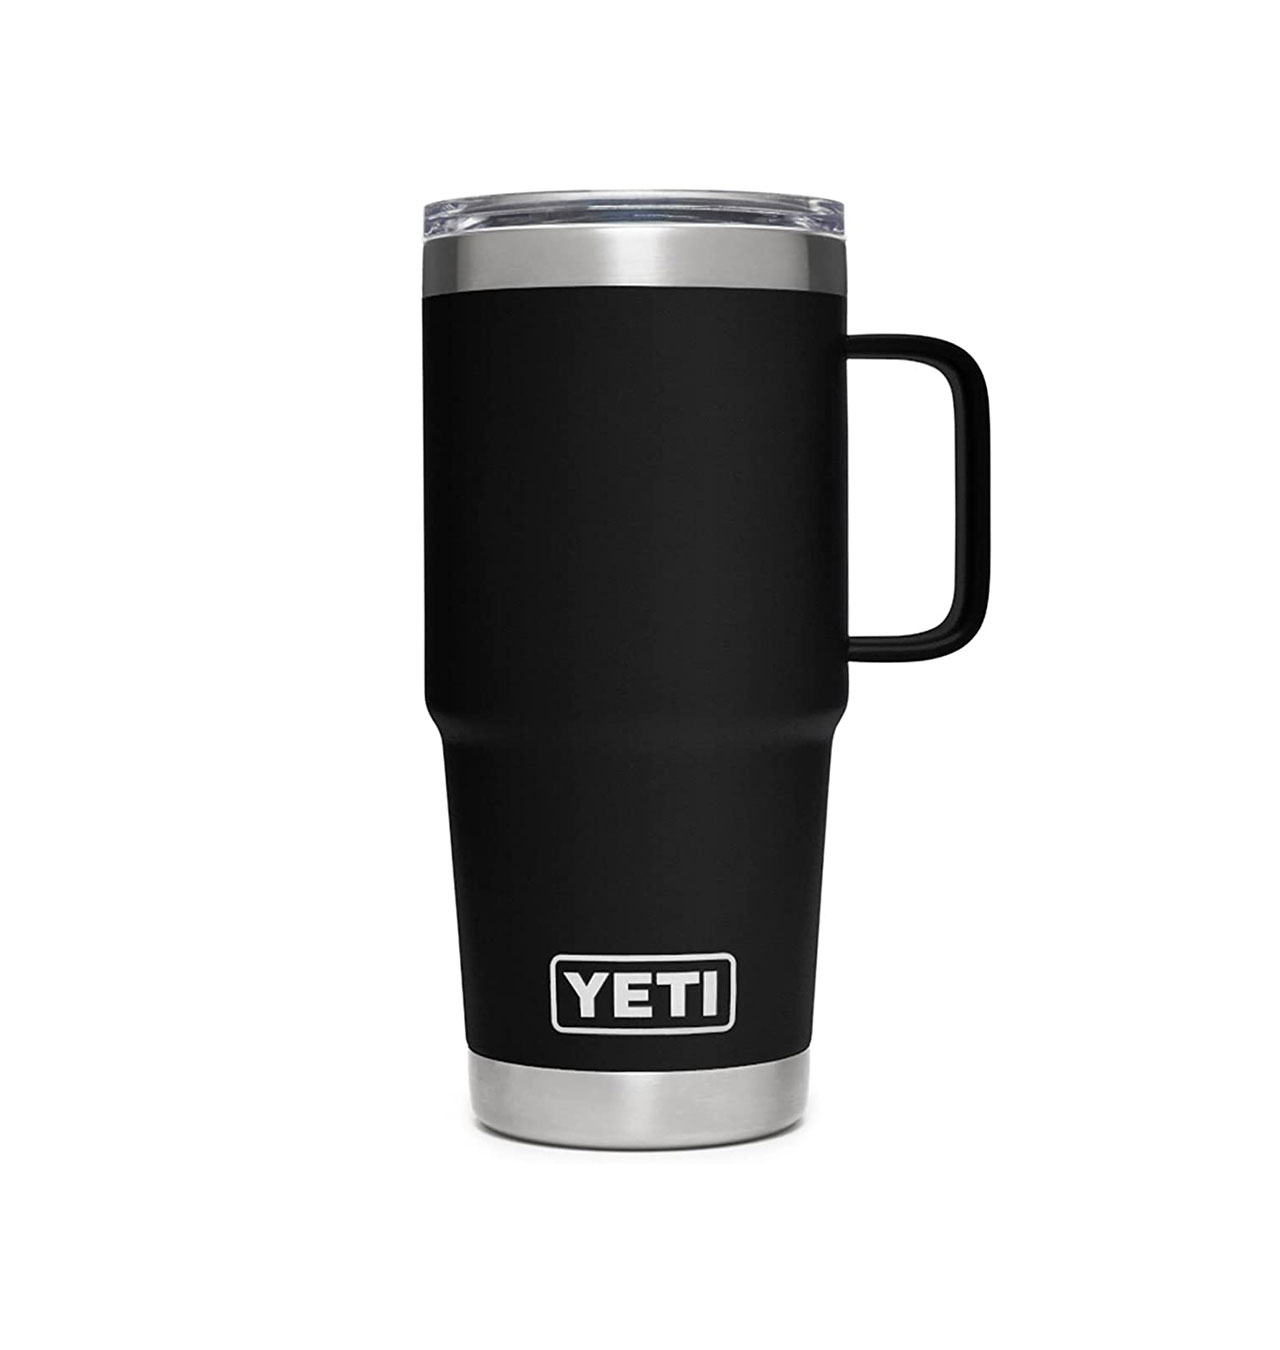 Yeti---Rambler-20-oz-Travel-Mug-with-Stronghold-Lid---Black21